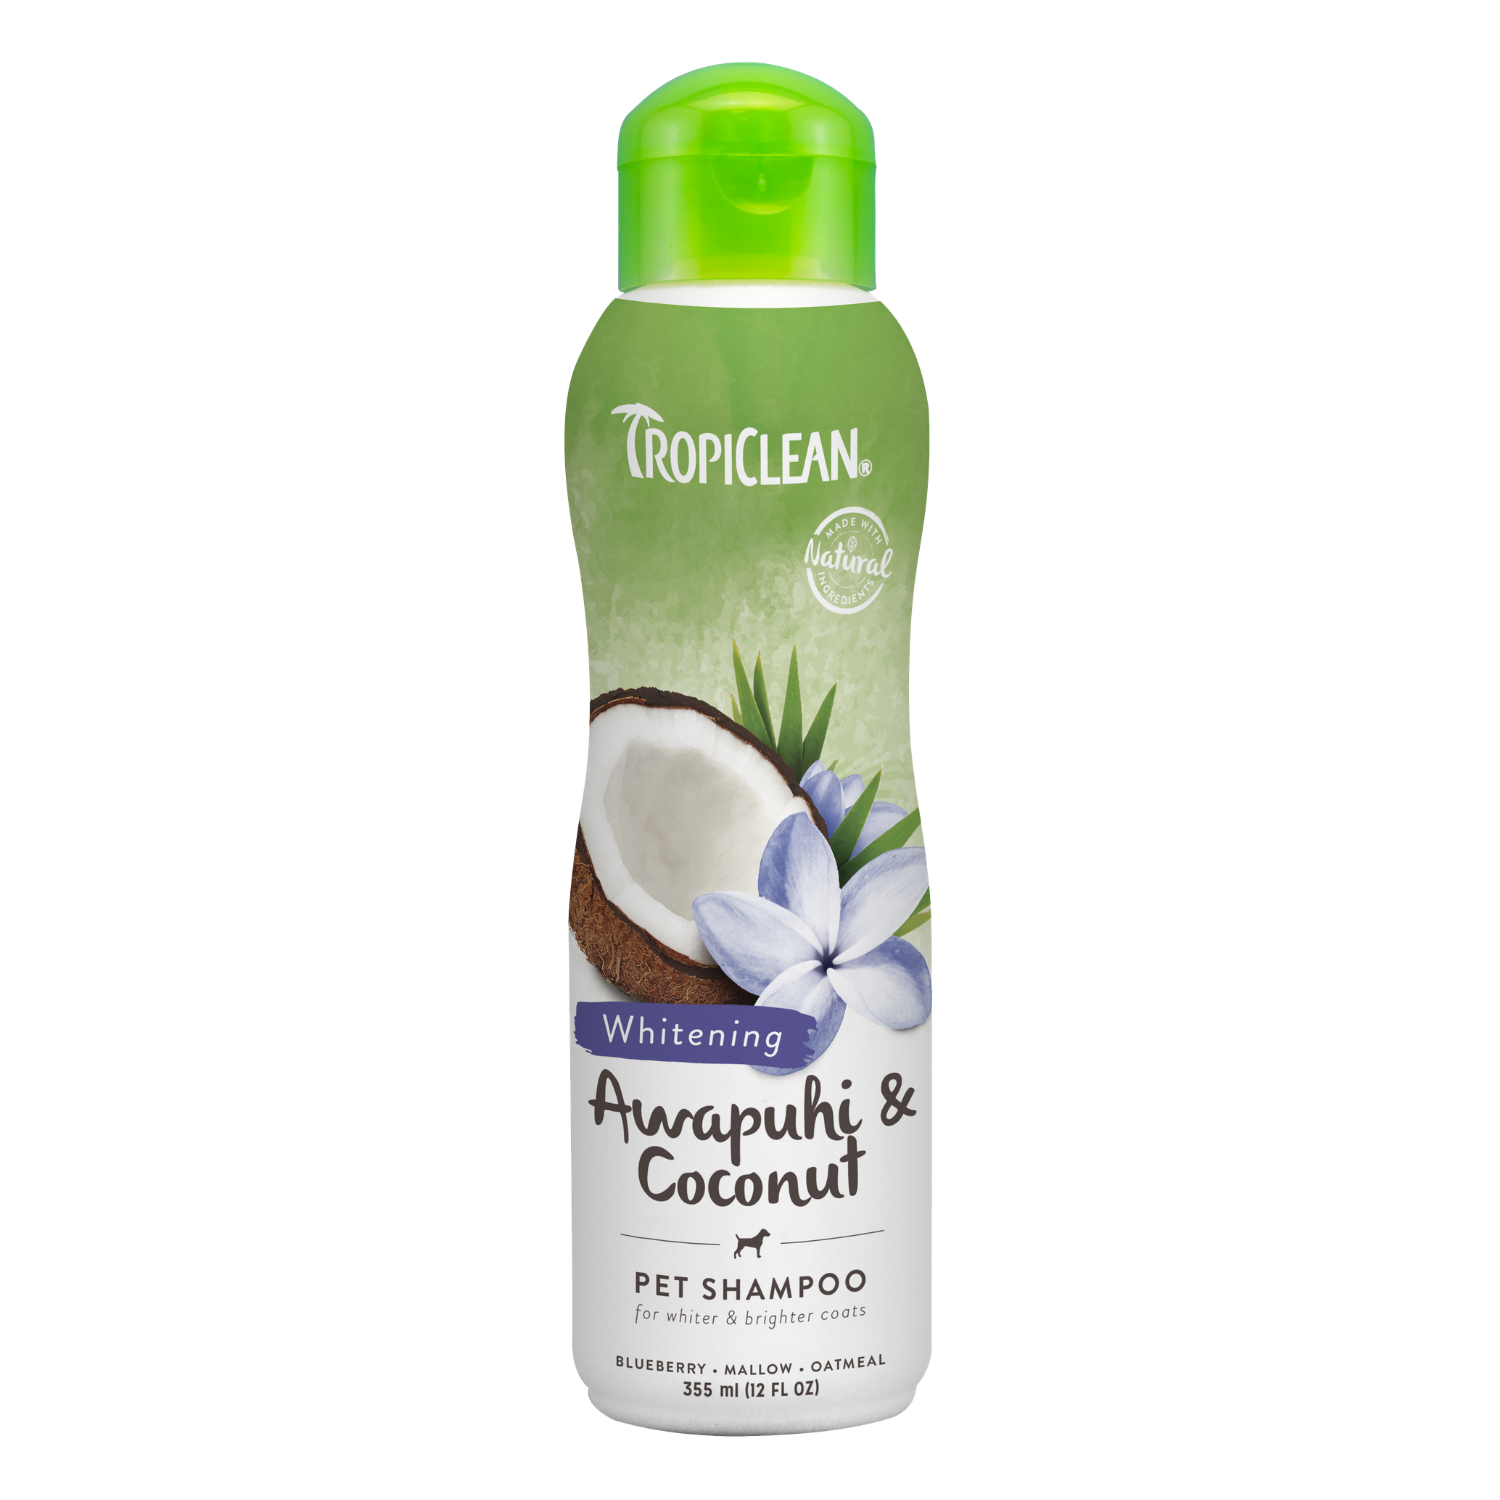 Tropiclean Awapuhi & Coconut Pet Shampoo (Whitening) - 355ml / 3.79L